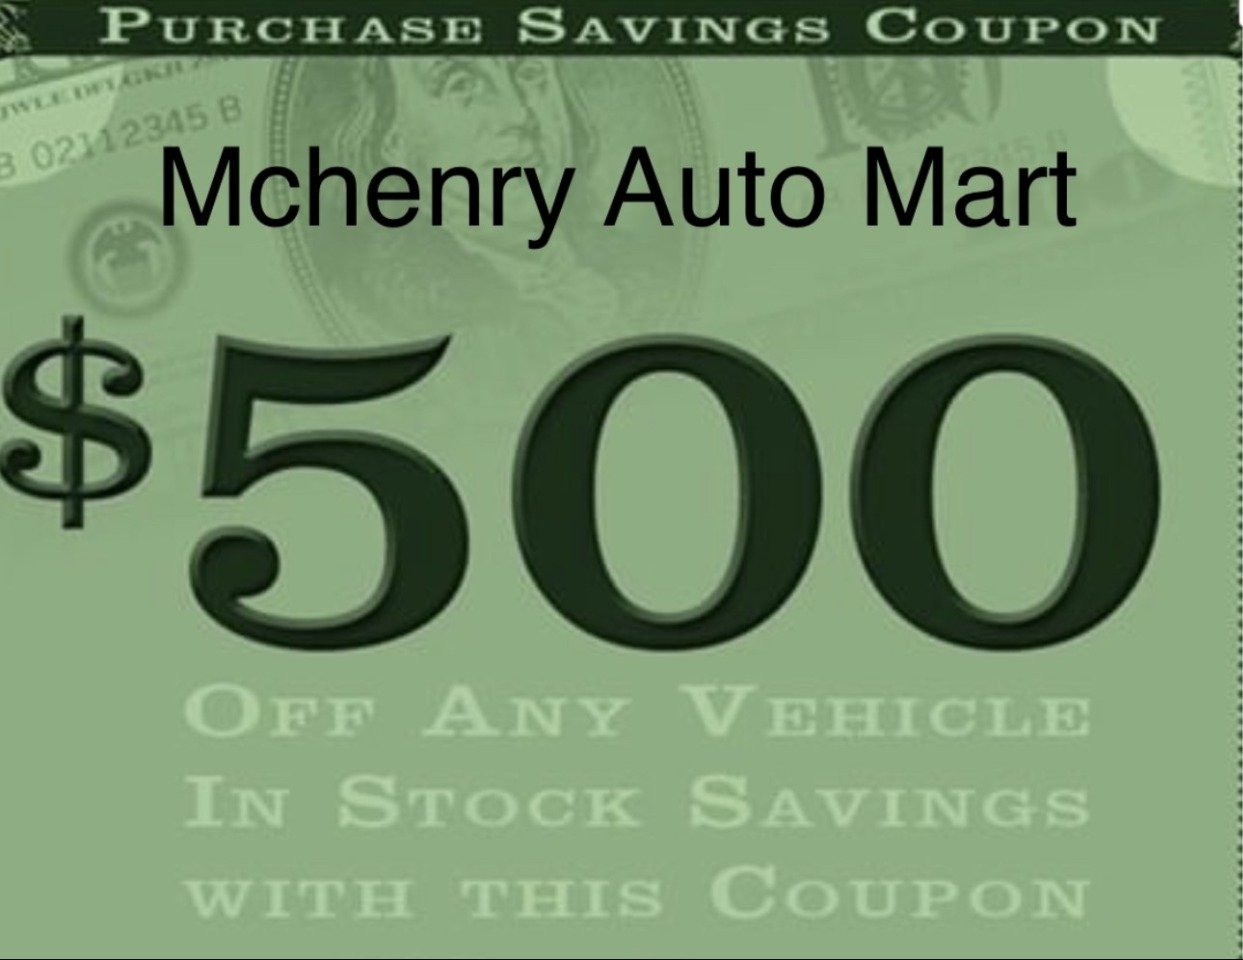 McHenry Auto Mart